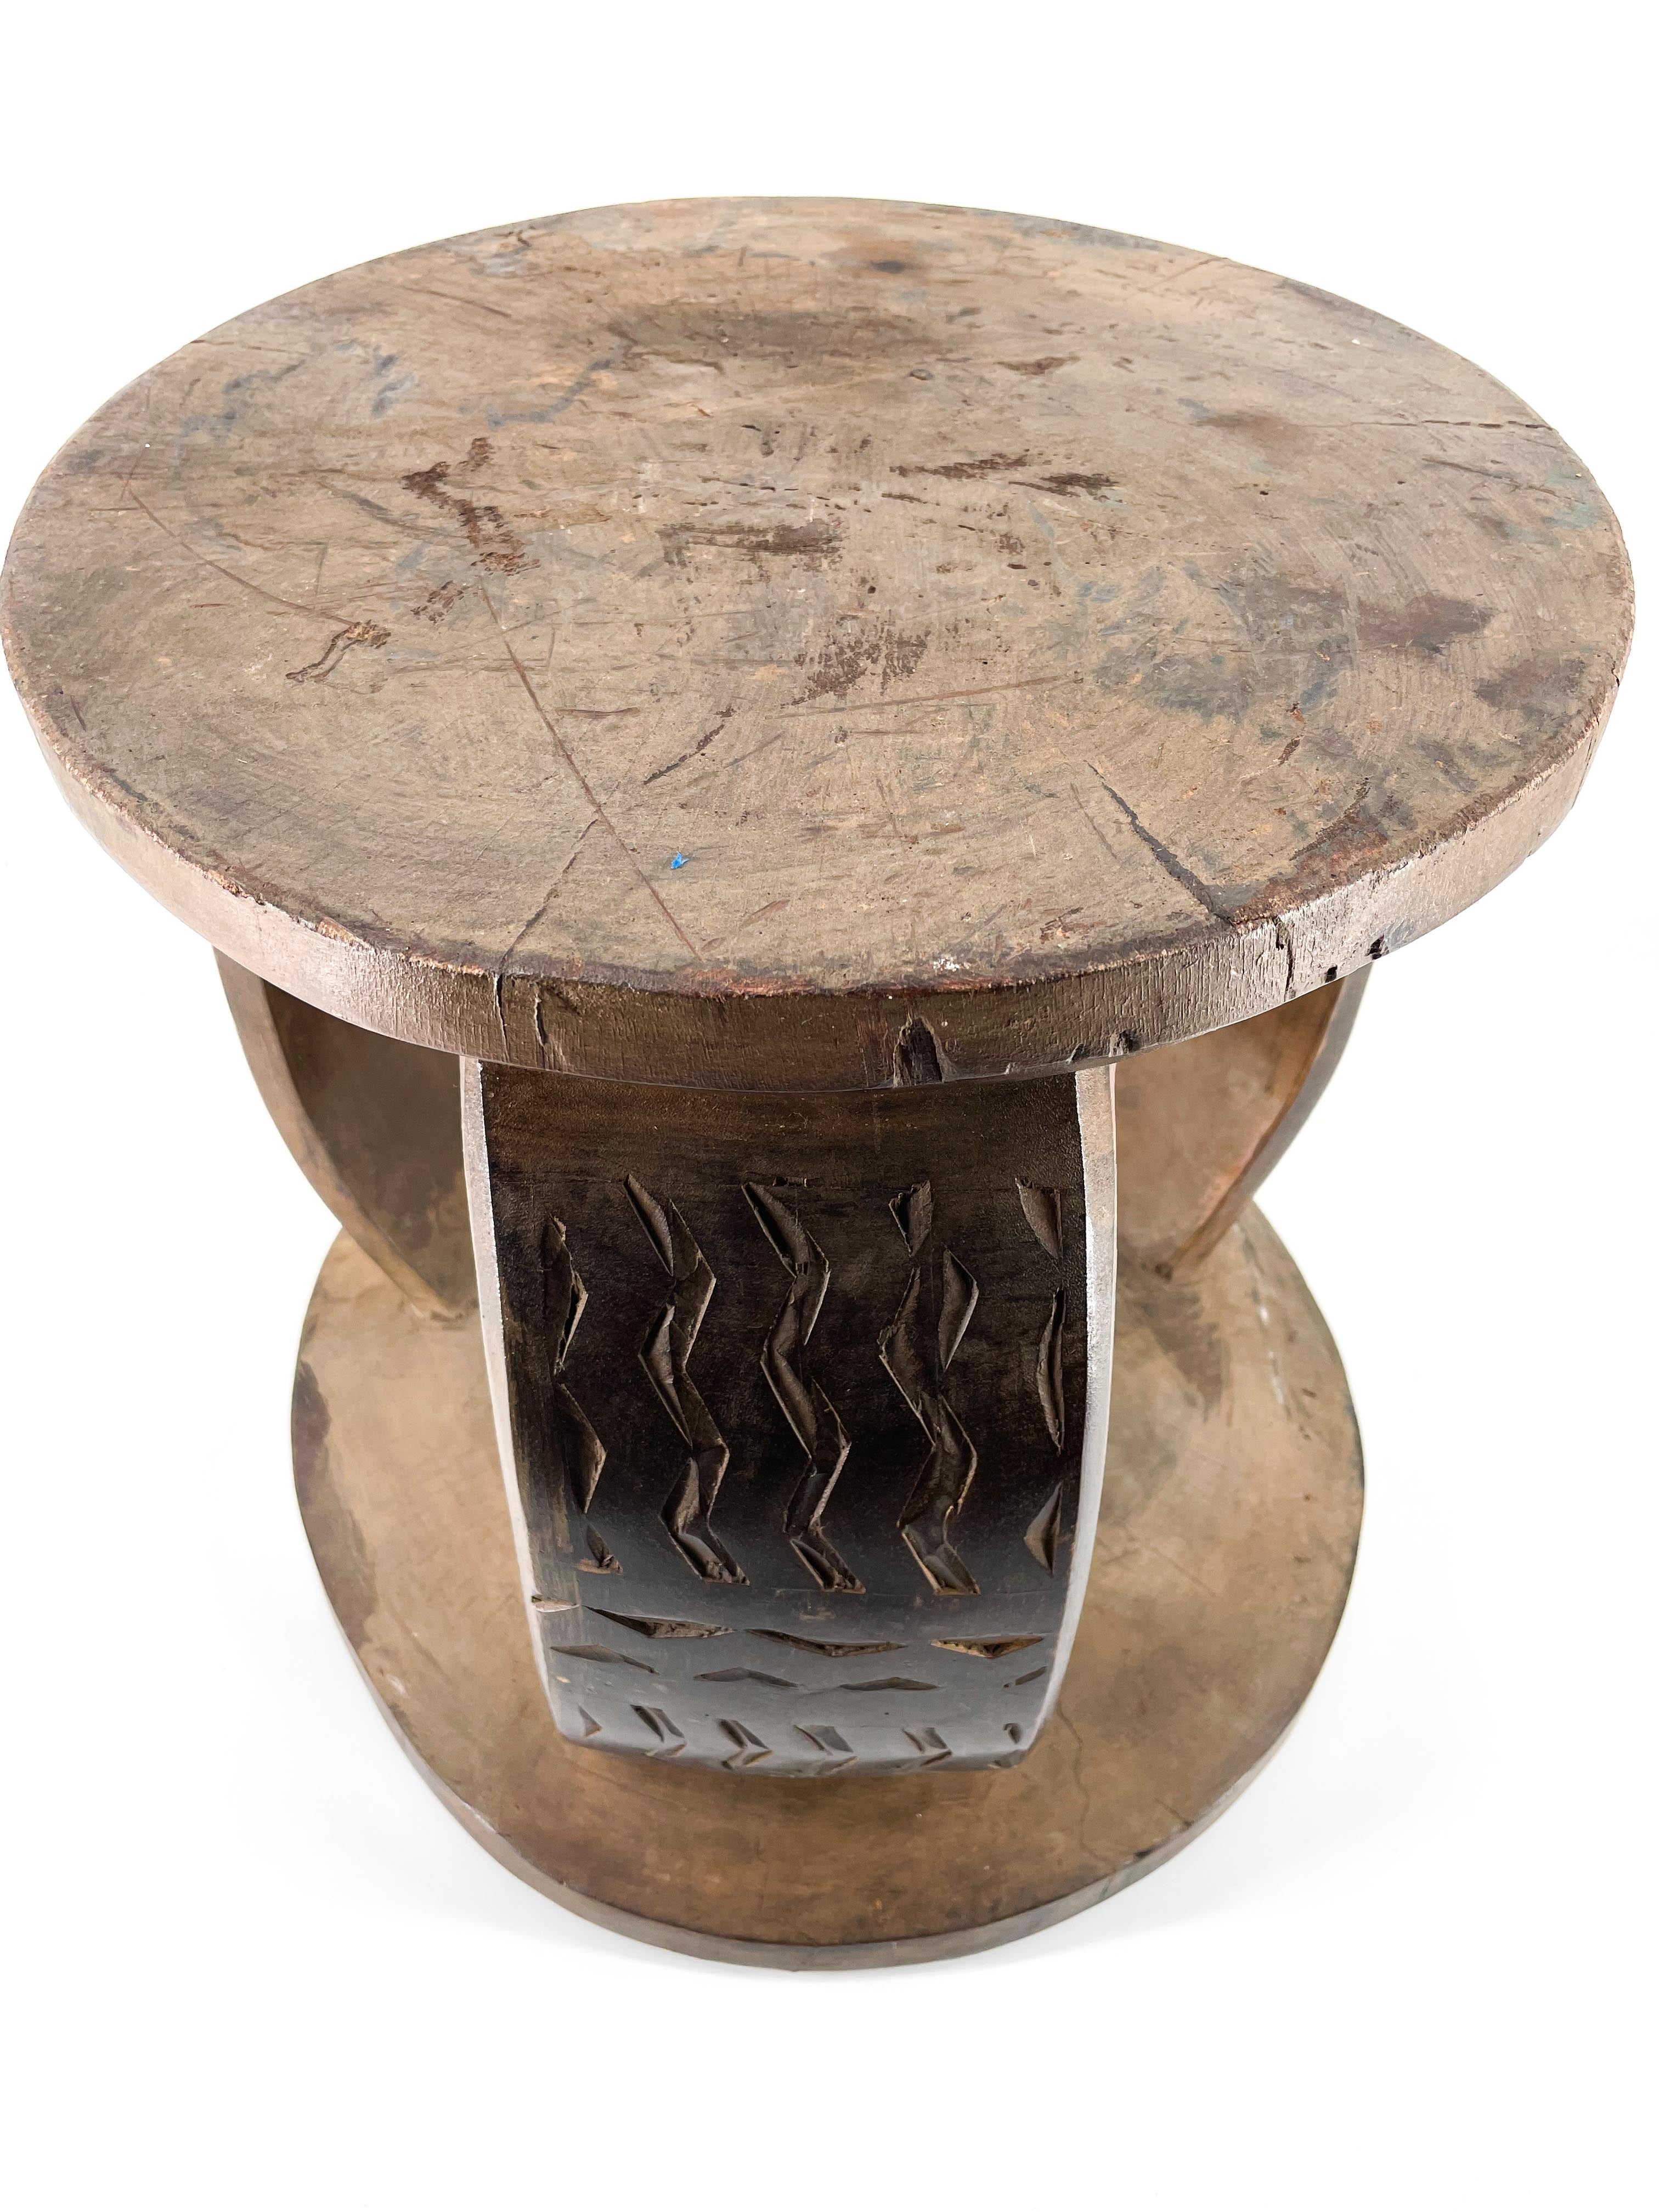 HeHe stool / side table